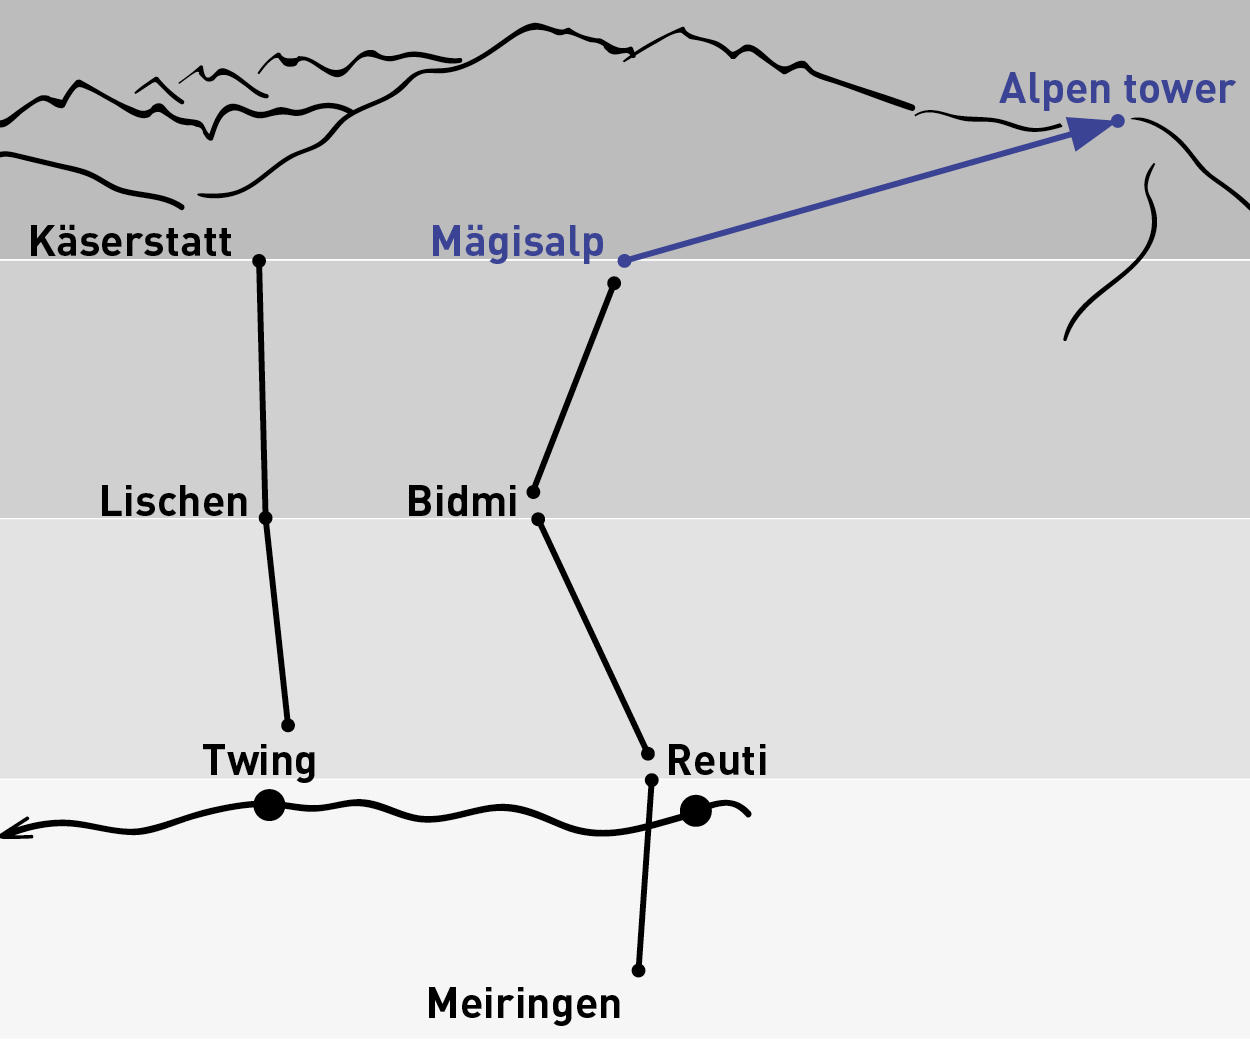 Mägisalp – Alpen tower | Einfache Fahrt